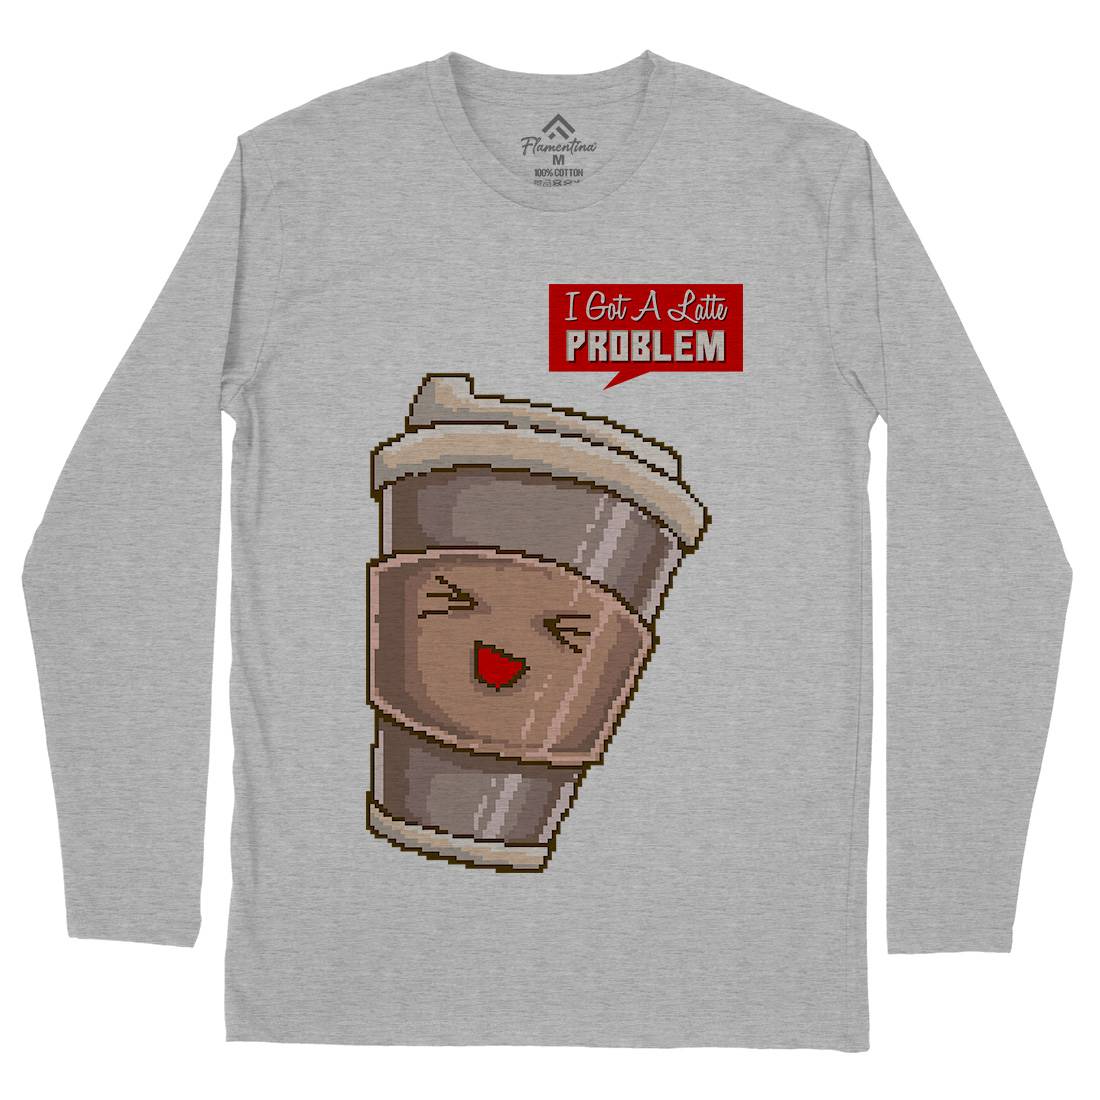 I Got A Latte Problem Mens Long Sleeve T-Shirt Drinks B914